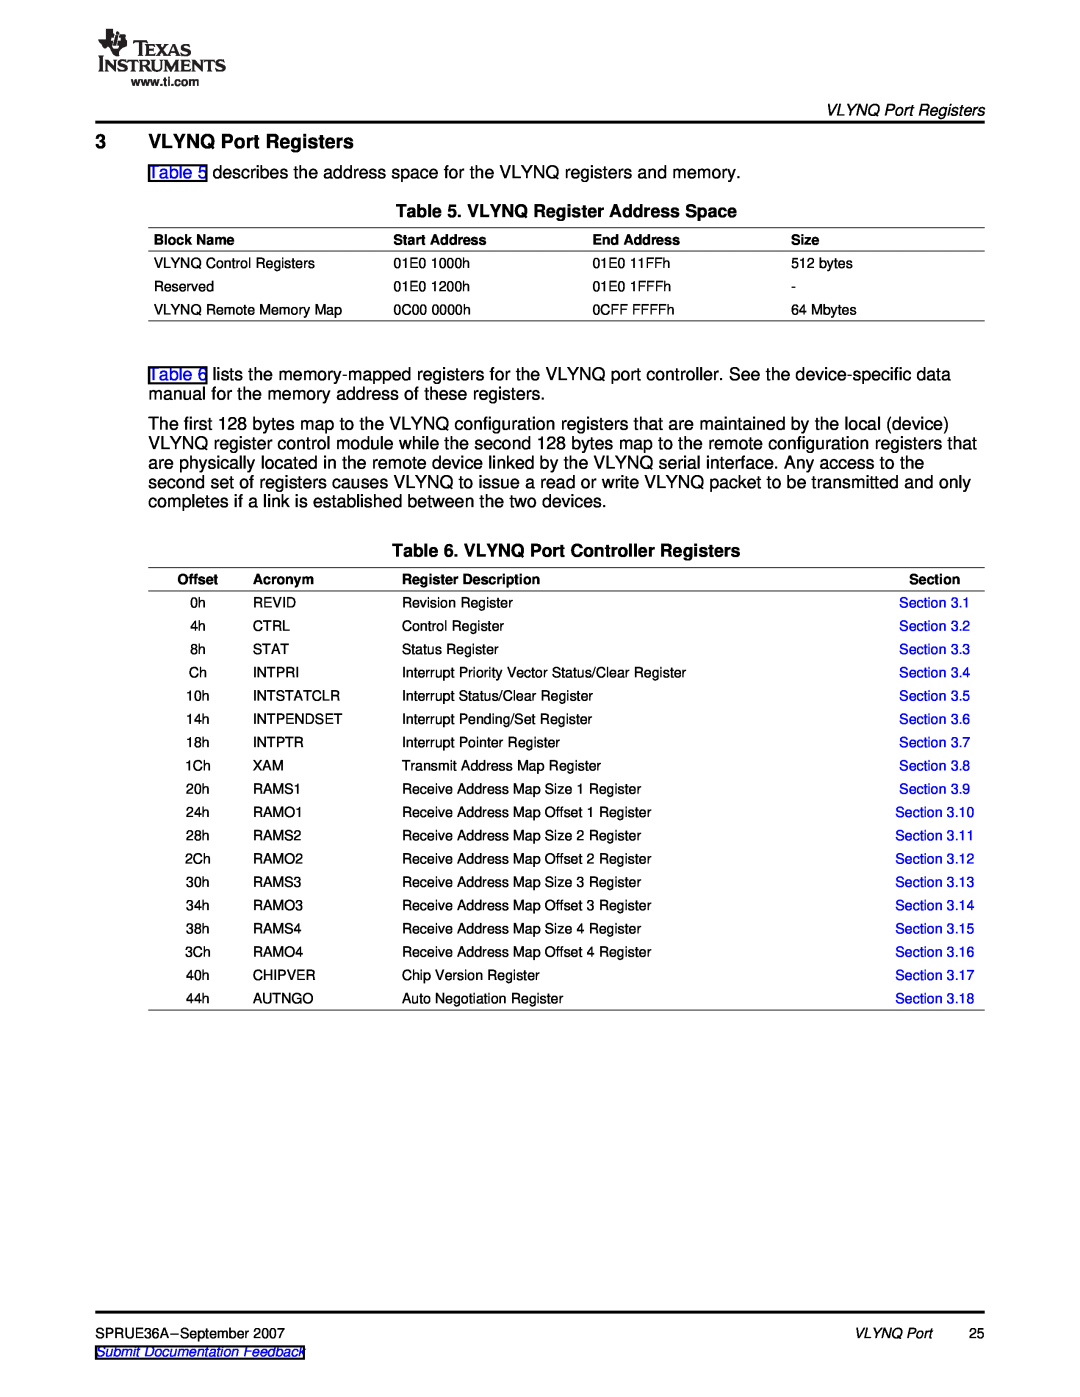 Texas Instruments manual VLYNQ Port Registers, VLYNQ Register Address Space, VLYNQ Port Controller Registers 